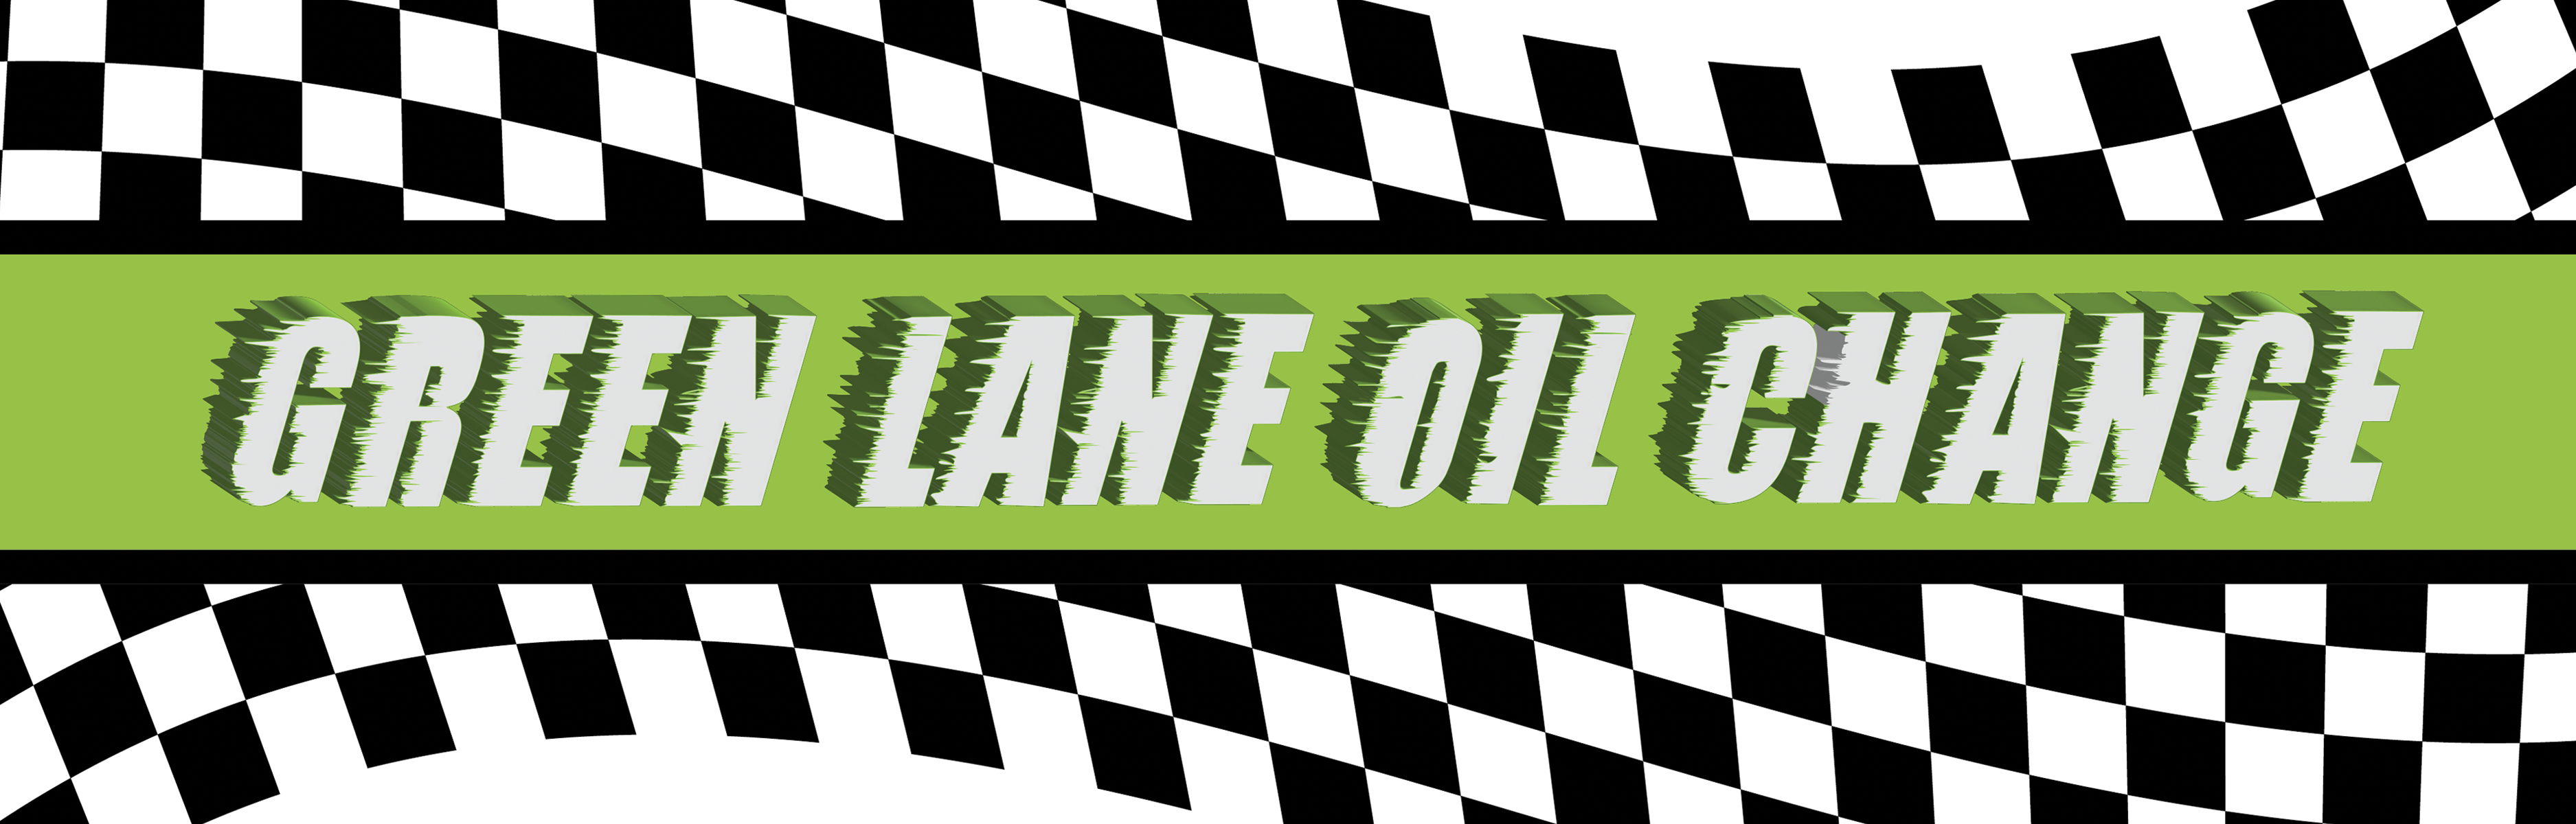 Green Lane Motorcycle Oil Change